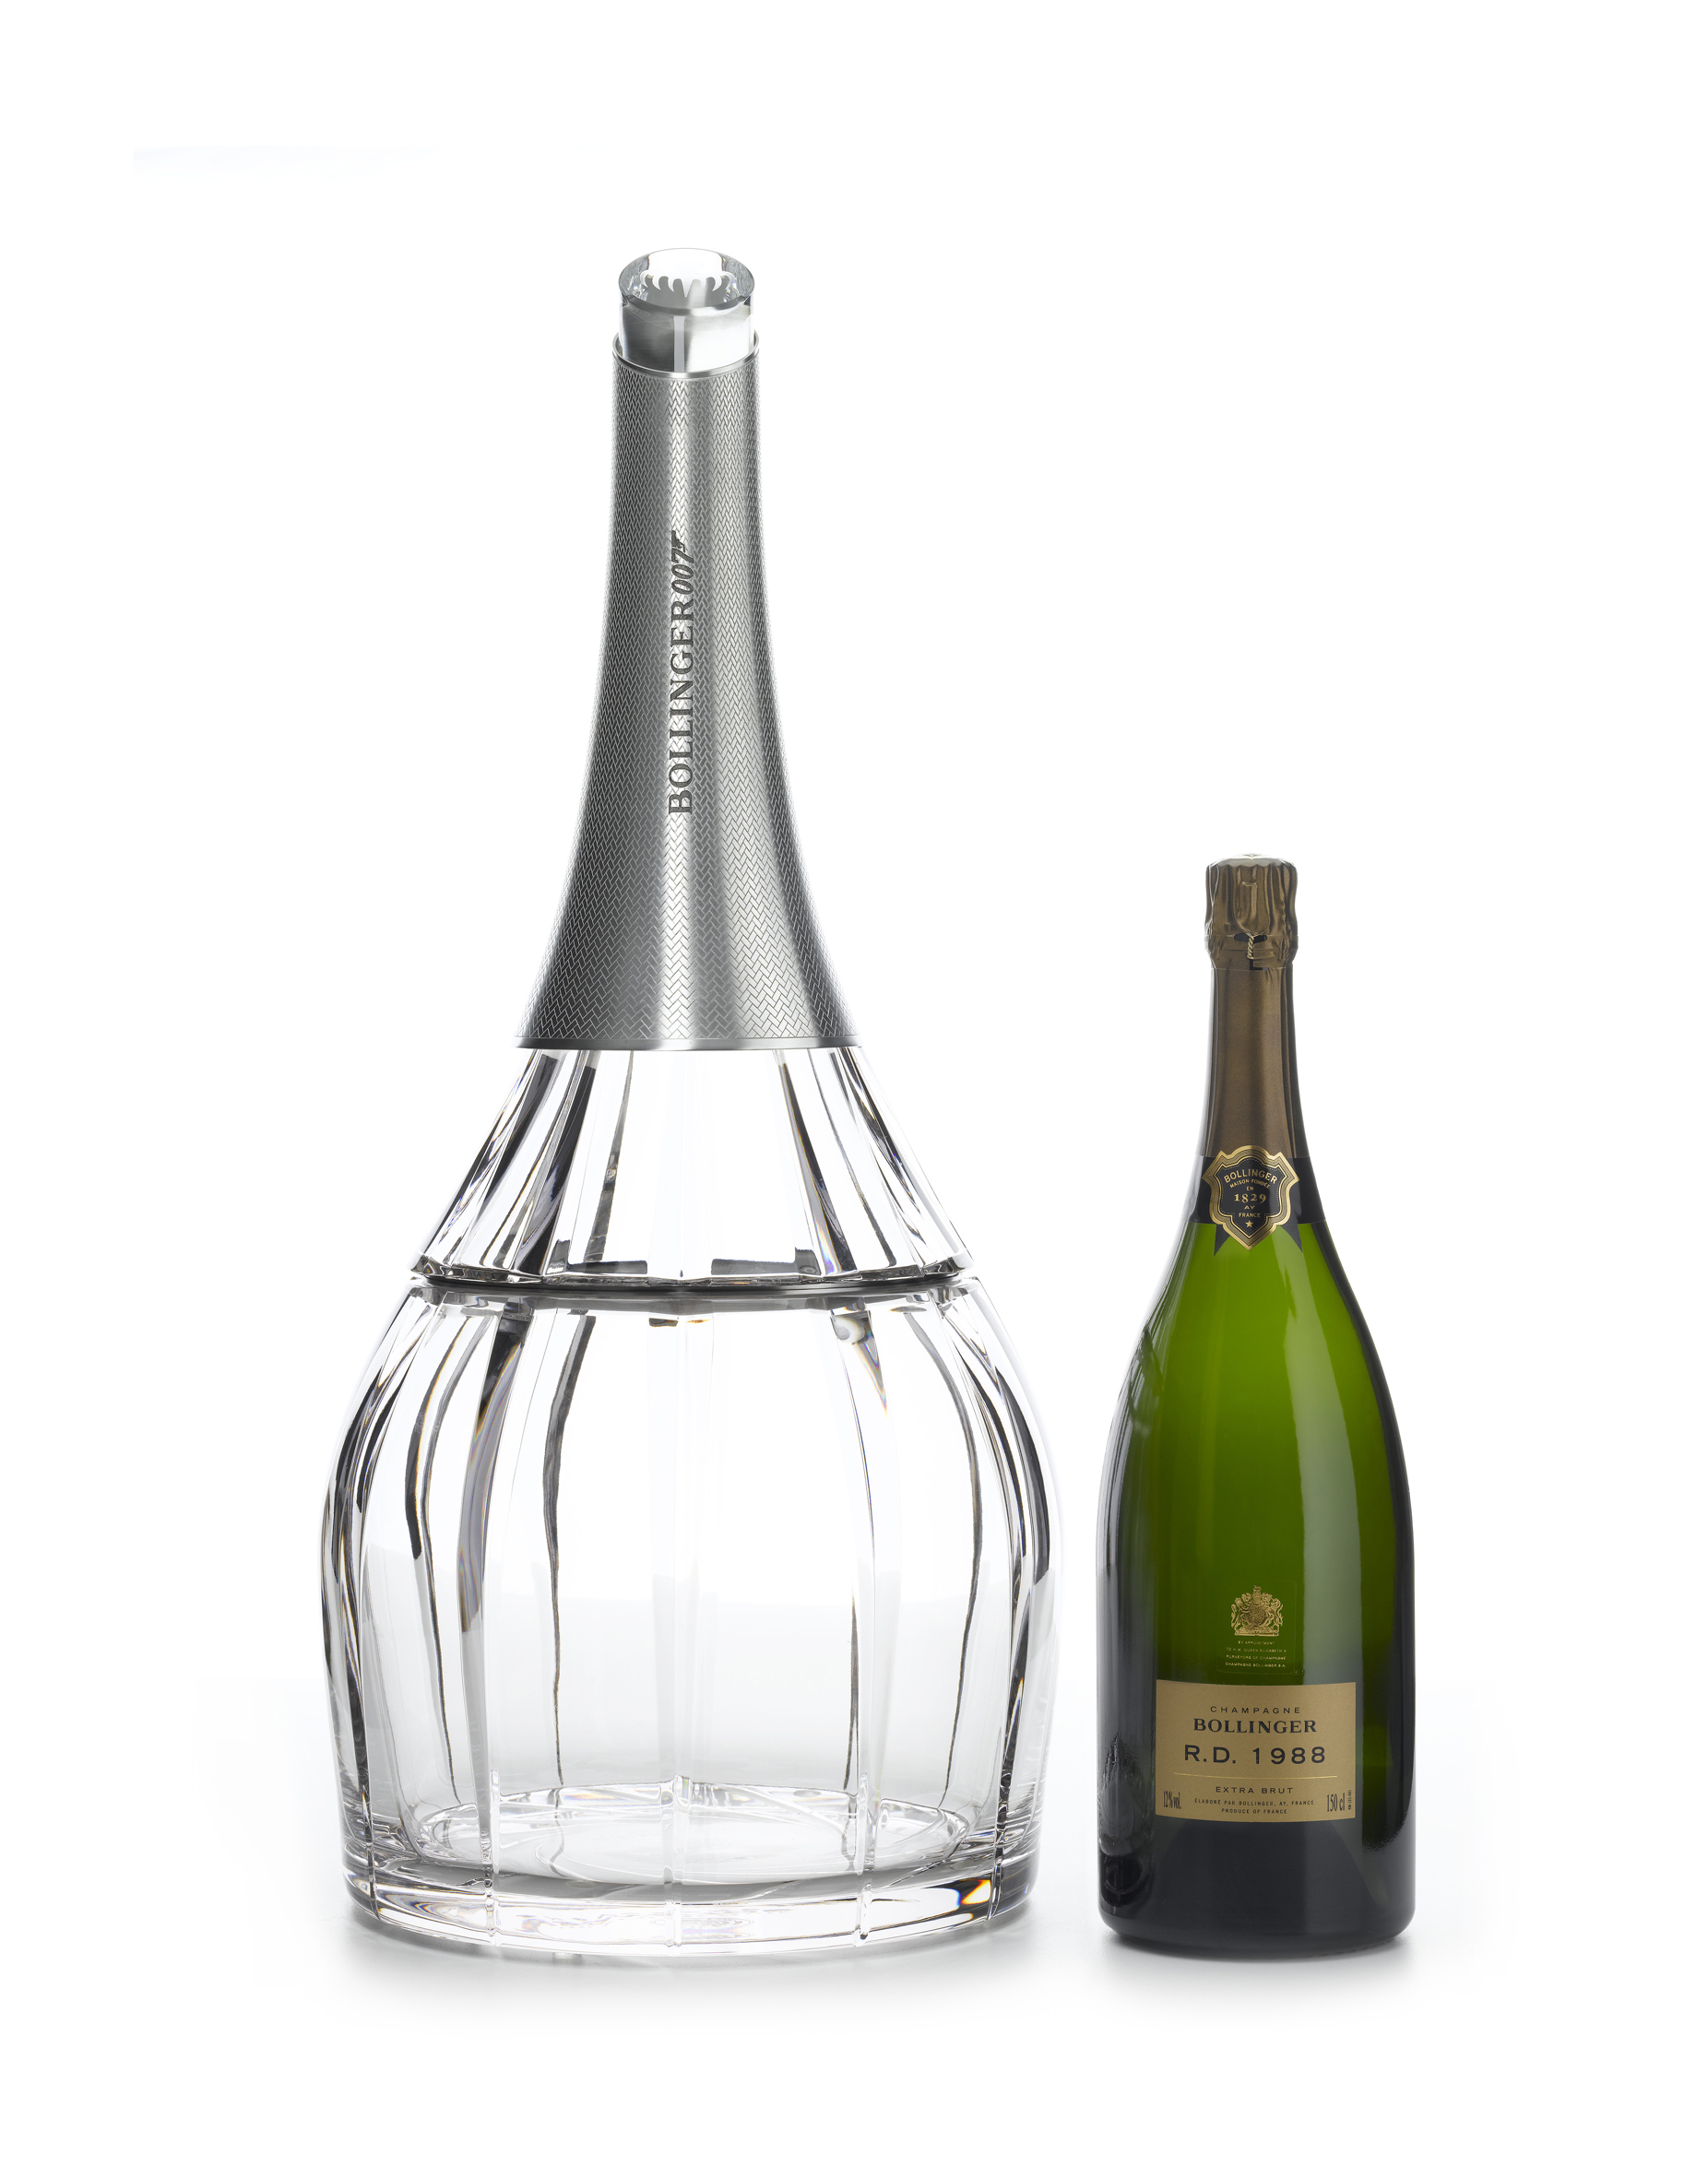 BOLLINGER_Cristal-Set_DESIGN-PRODUIT_Spiritueux-Champagne-James-Bond-Crystalerie-Saint-LouisPLANET-DESIGN-PARIS-Eric-Berthes_02.jpg